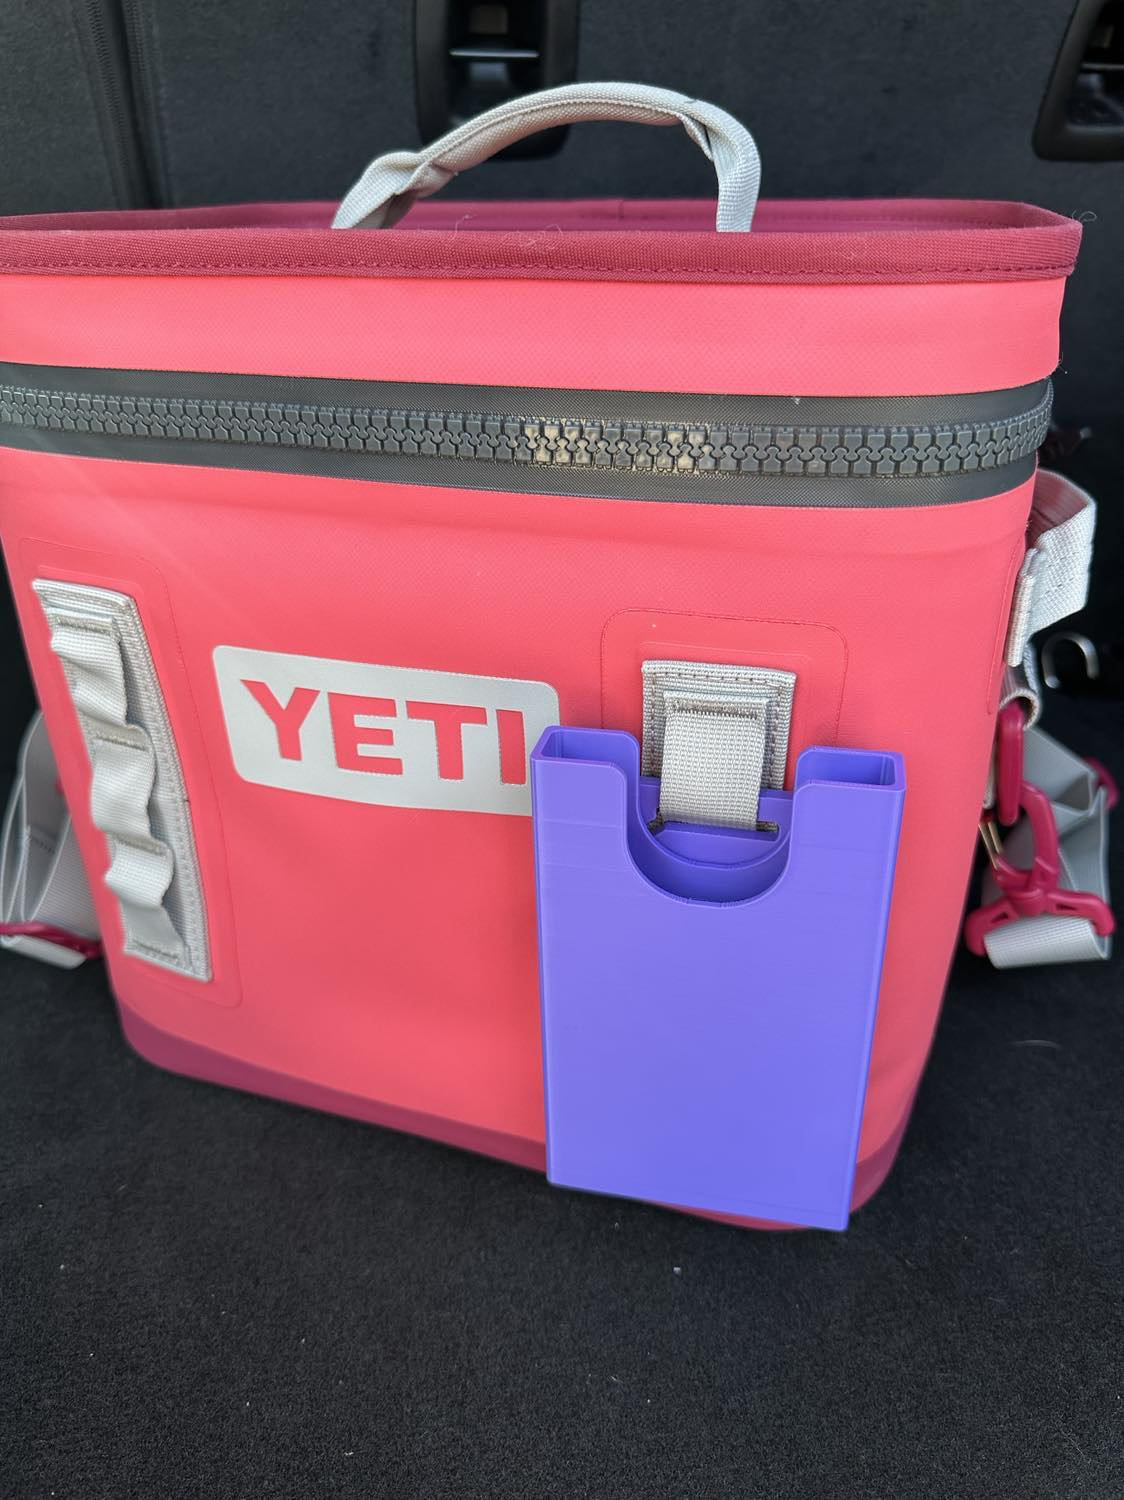 Yeti Phone Holder, Yeti Cooler Wallet Holder, Yeti Cooler Accessories, Yeti Soft Cooler Phone Holder , Yeti carry all phone holder